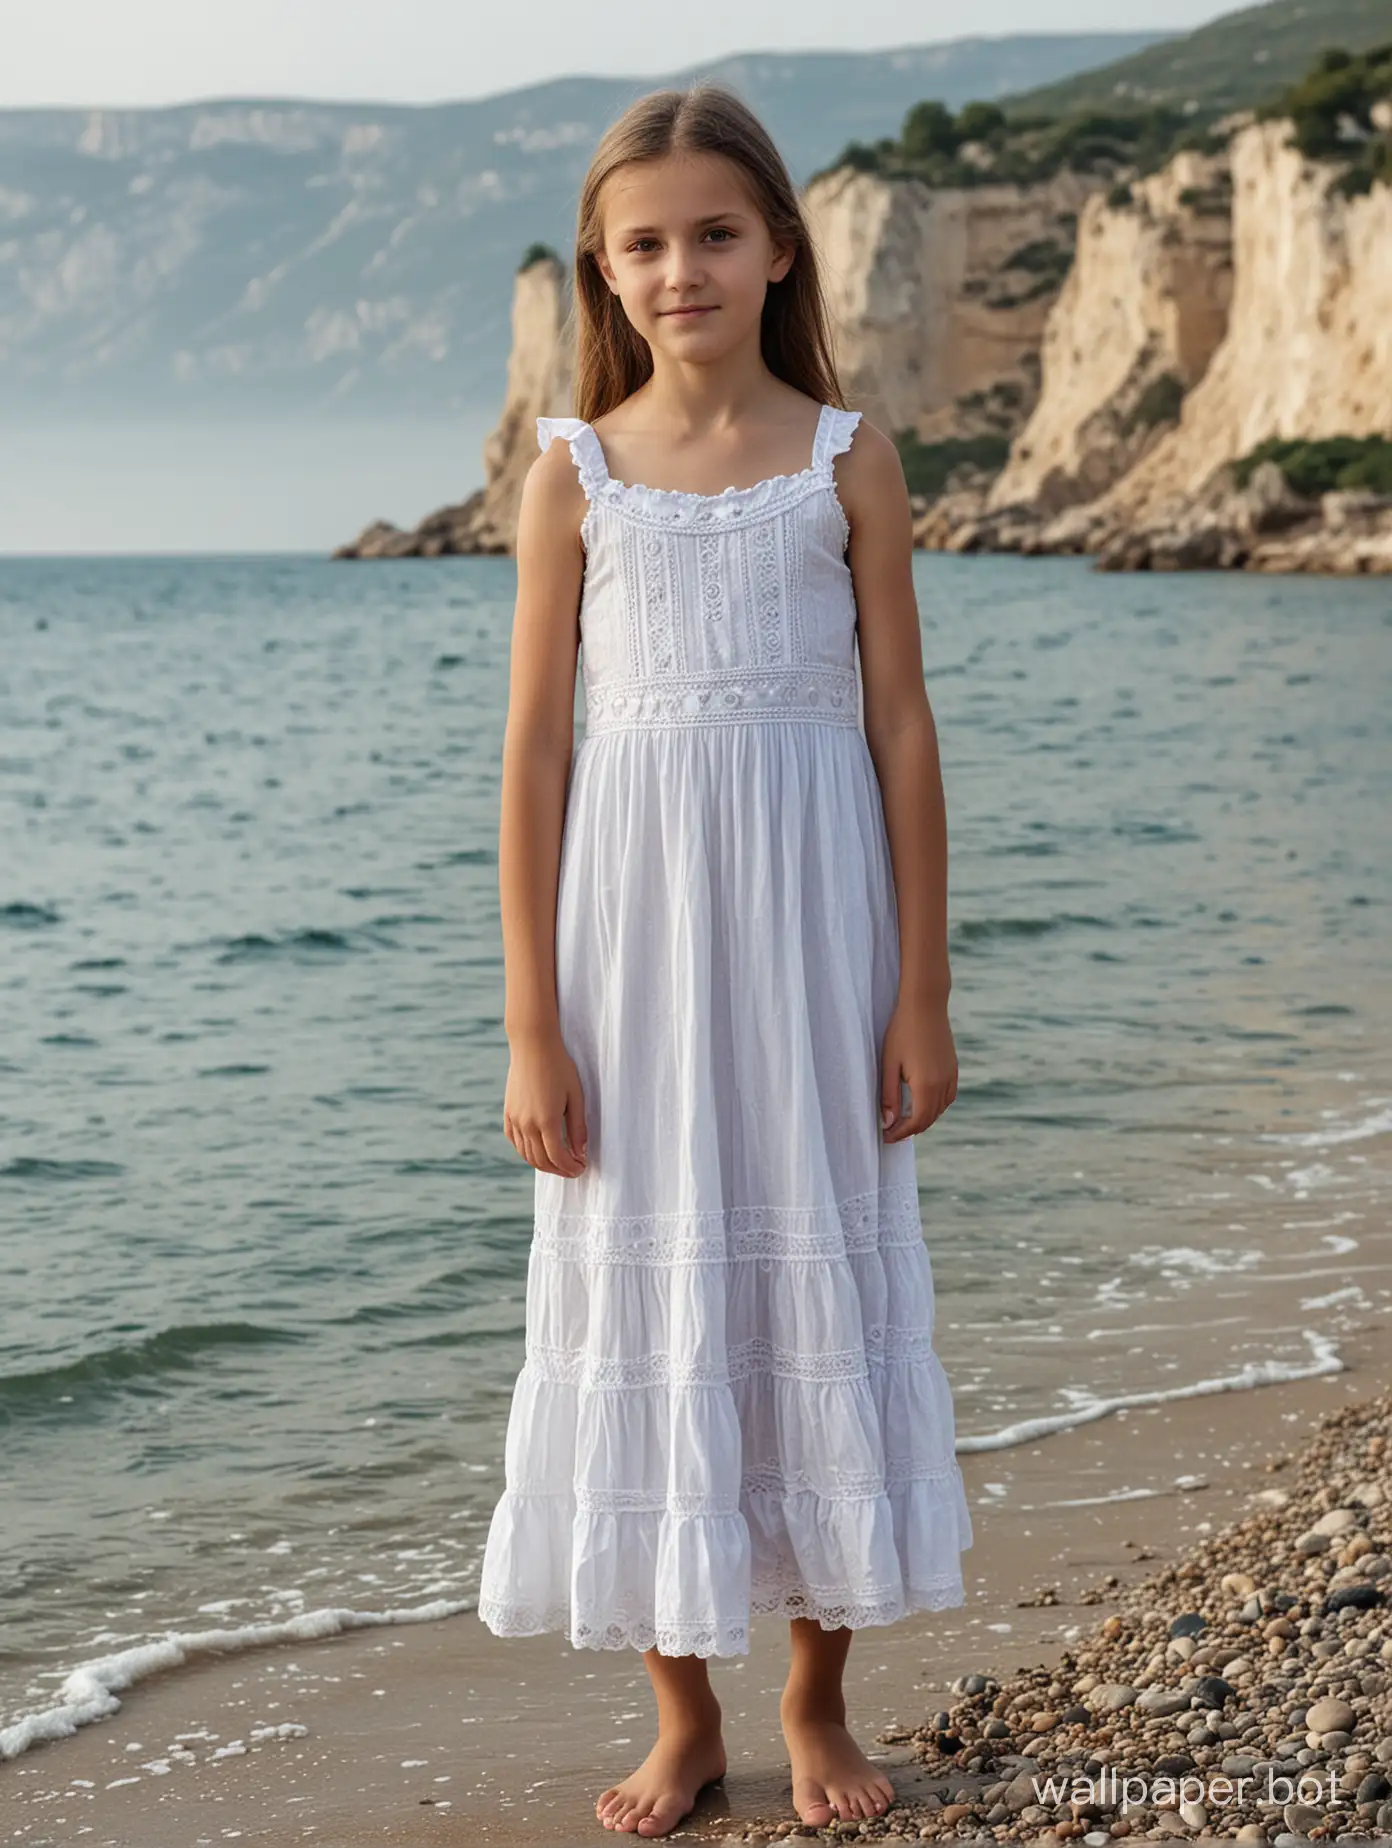 Crimea, seaside, a 10-year-old girl in a dress, posing, full-length, dress on bare body